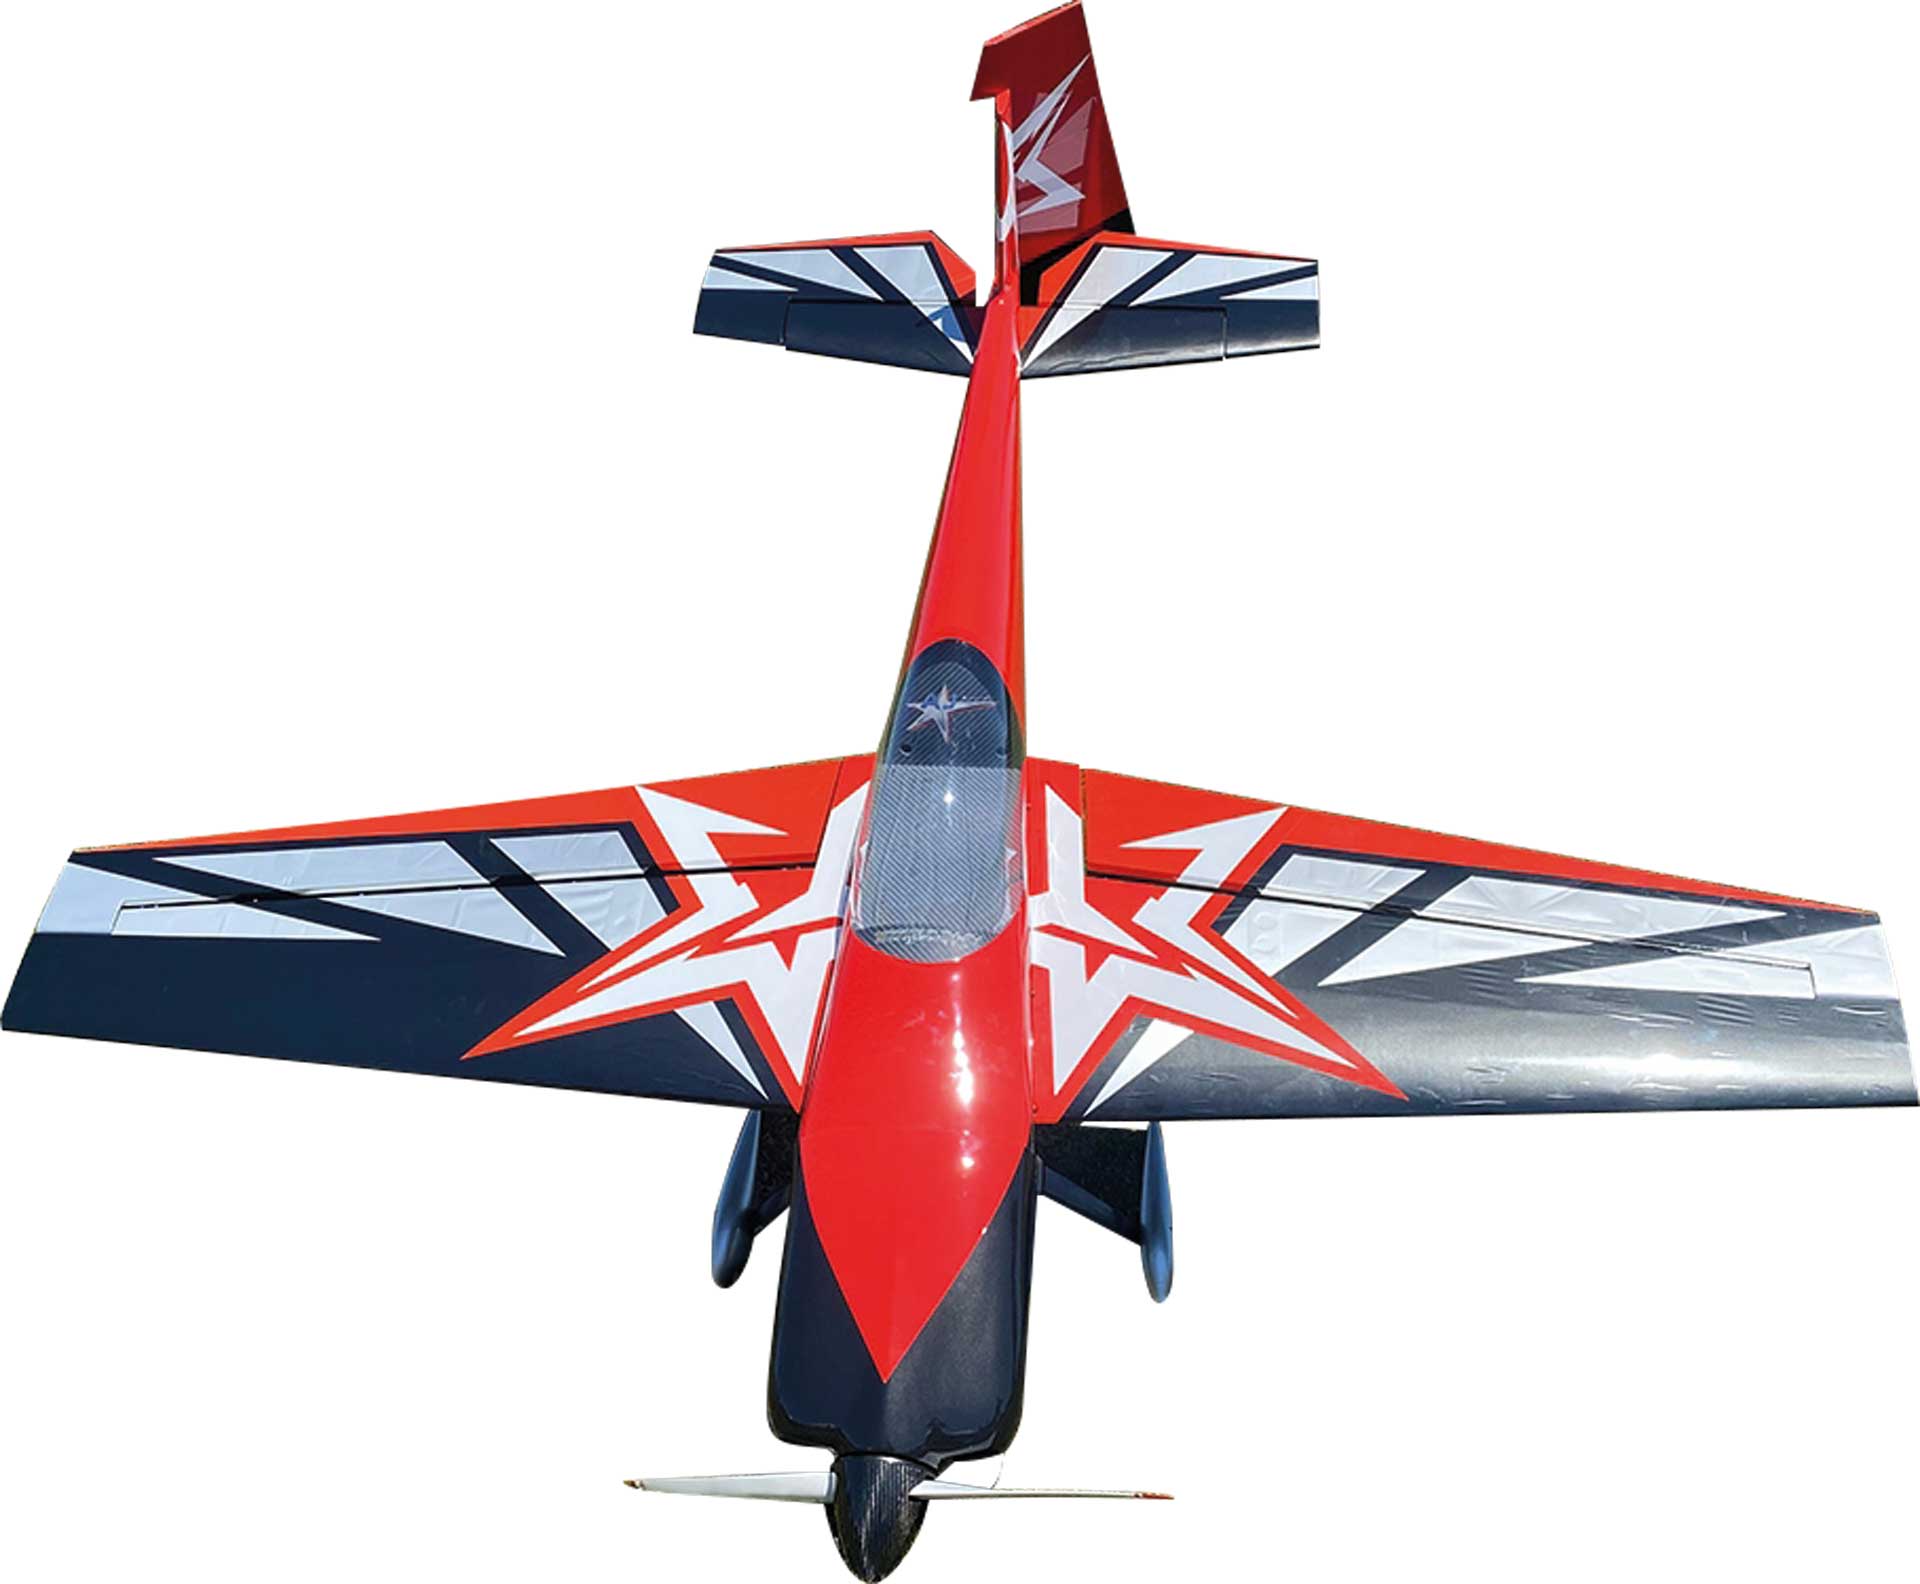 AJ AIRCRAFT Slick 74" 540 ARF red aerobatic model